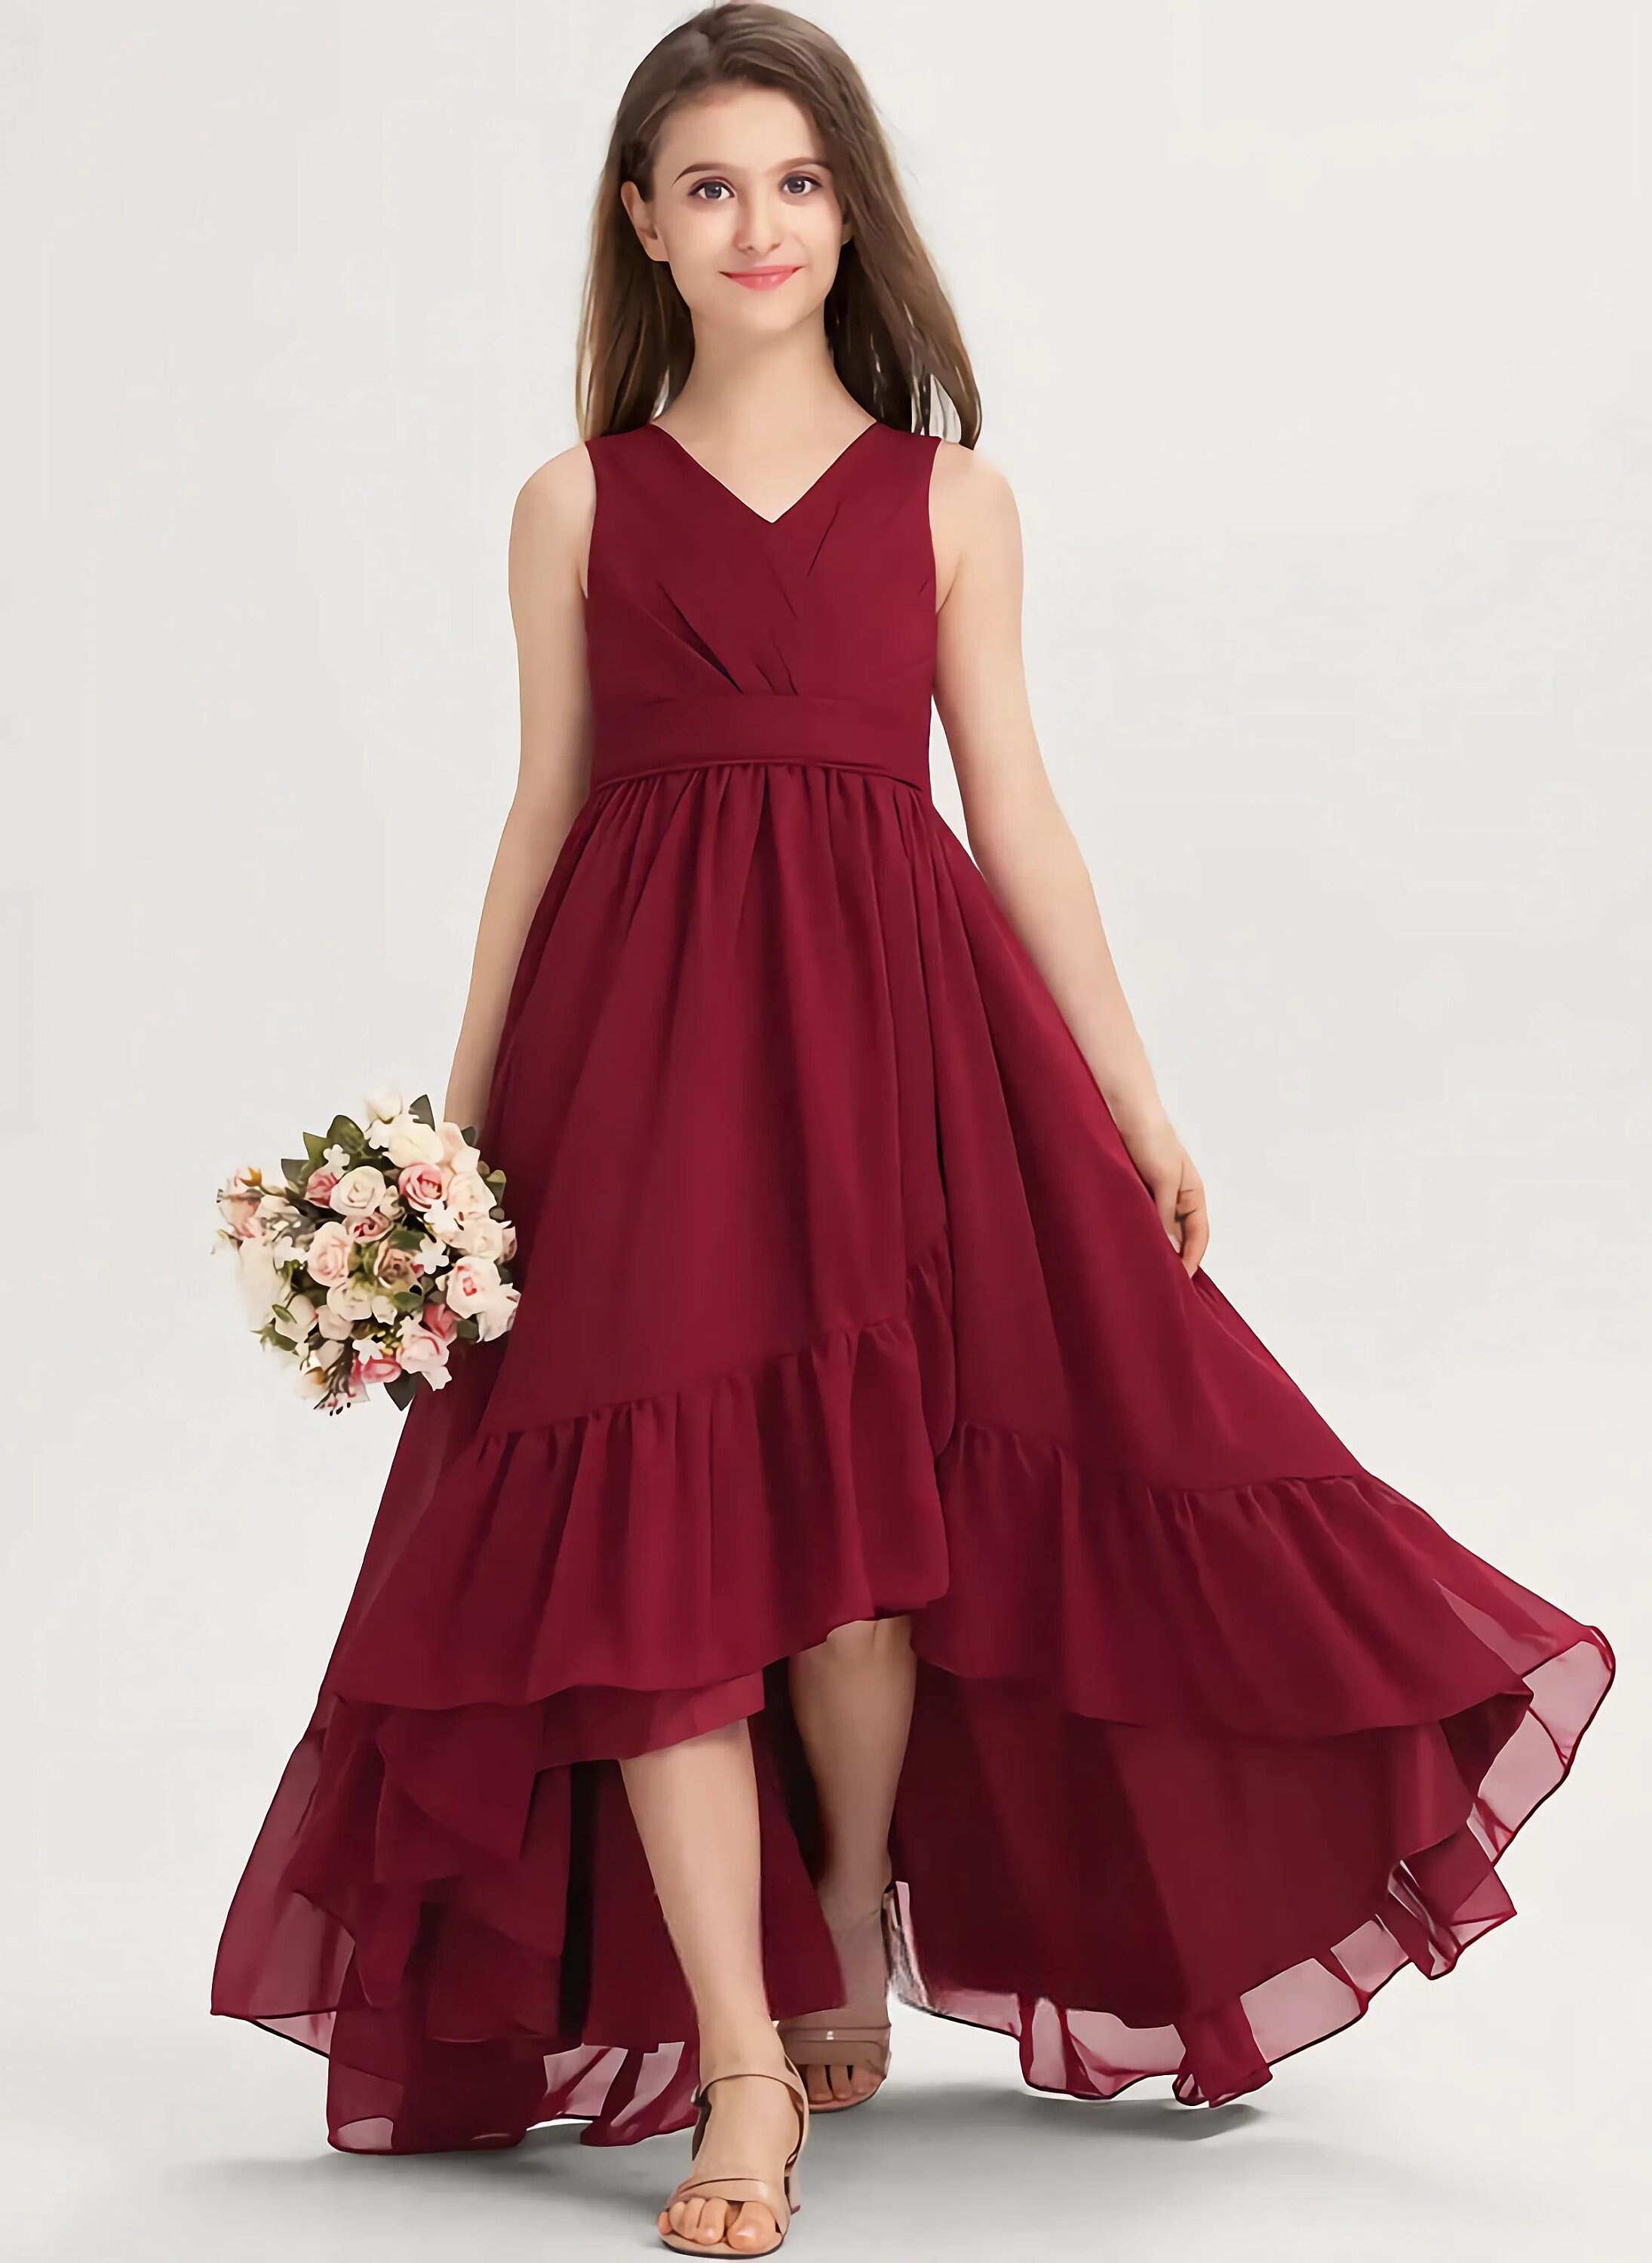 Burgundy Junior Bridesmaid Dress With Pleateda-line V-neck - Etsy